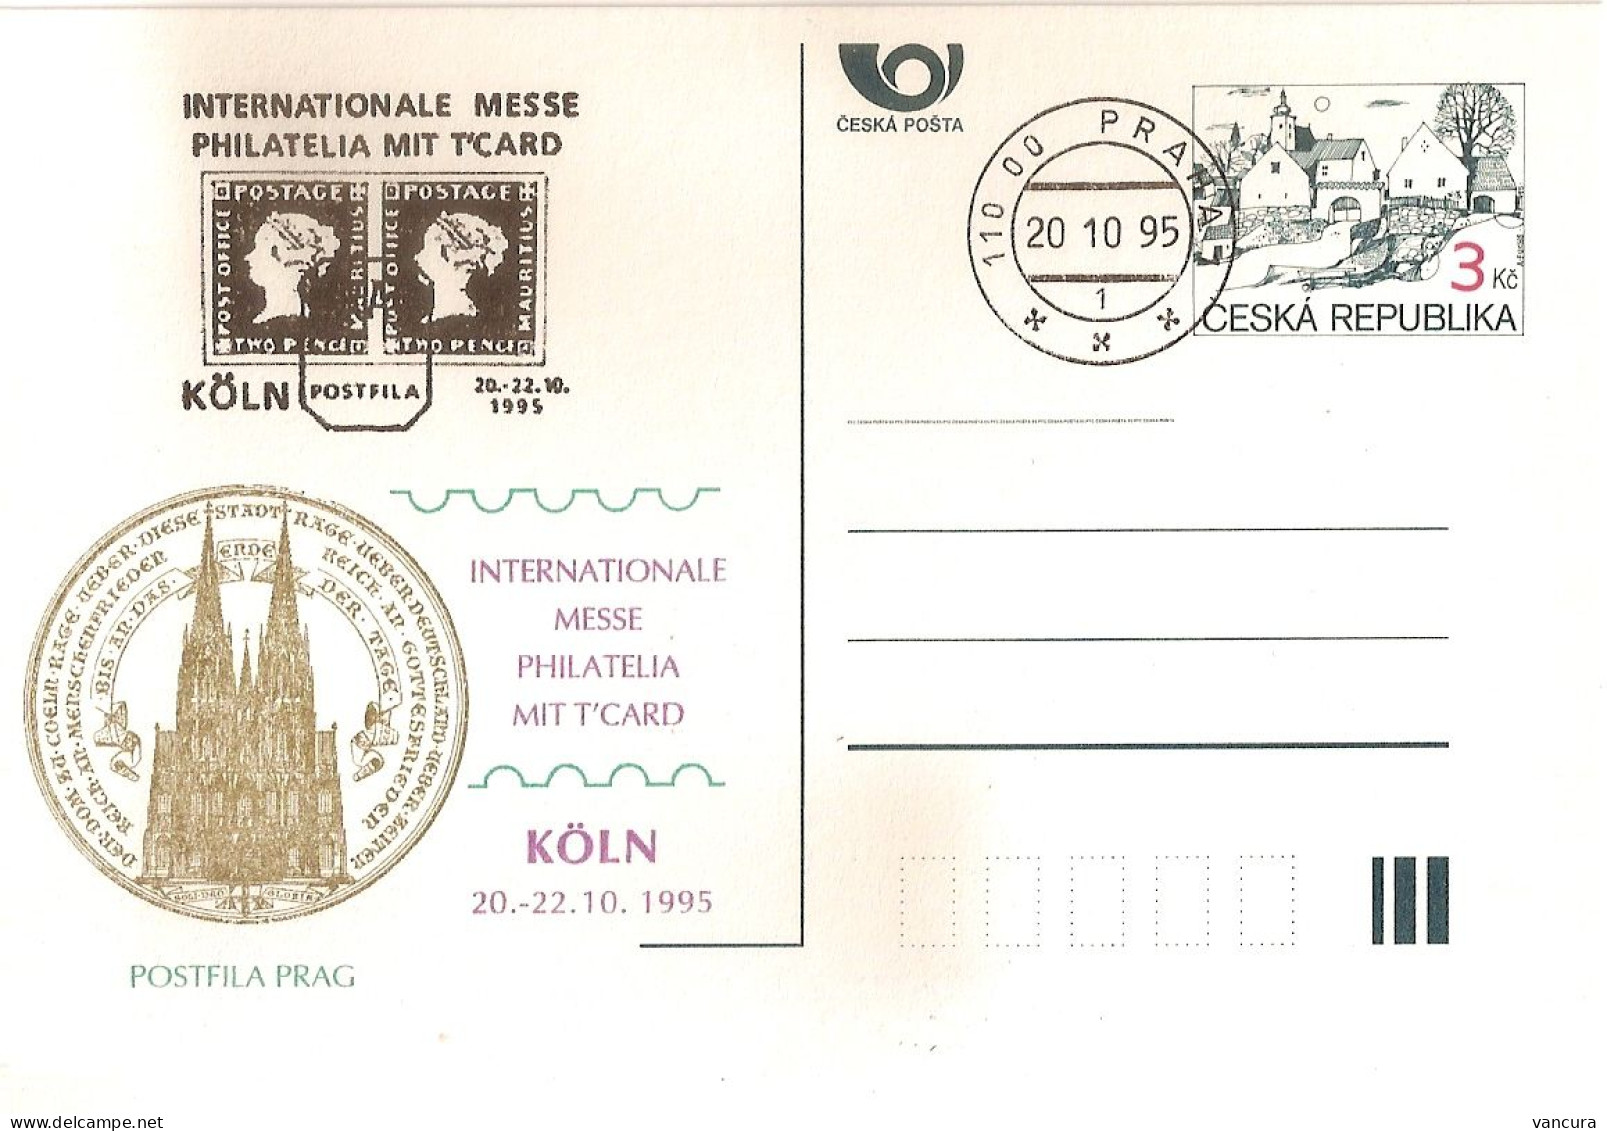 CDV A 10 Czech Republic Köln 1995 NOTICE POOR SCAN, BUT THE CARD IS PERFECT! Pennyblack - Cartes Postales